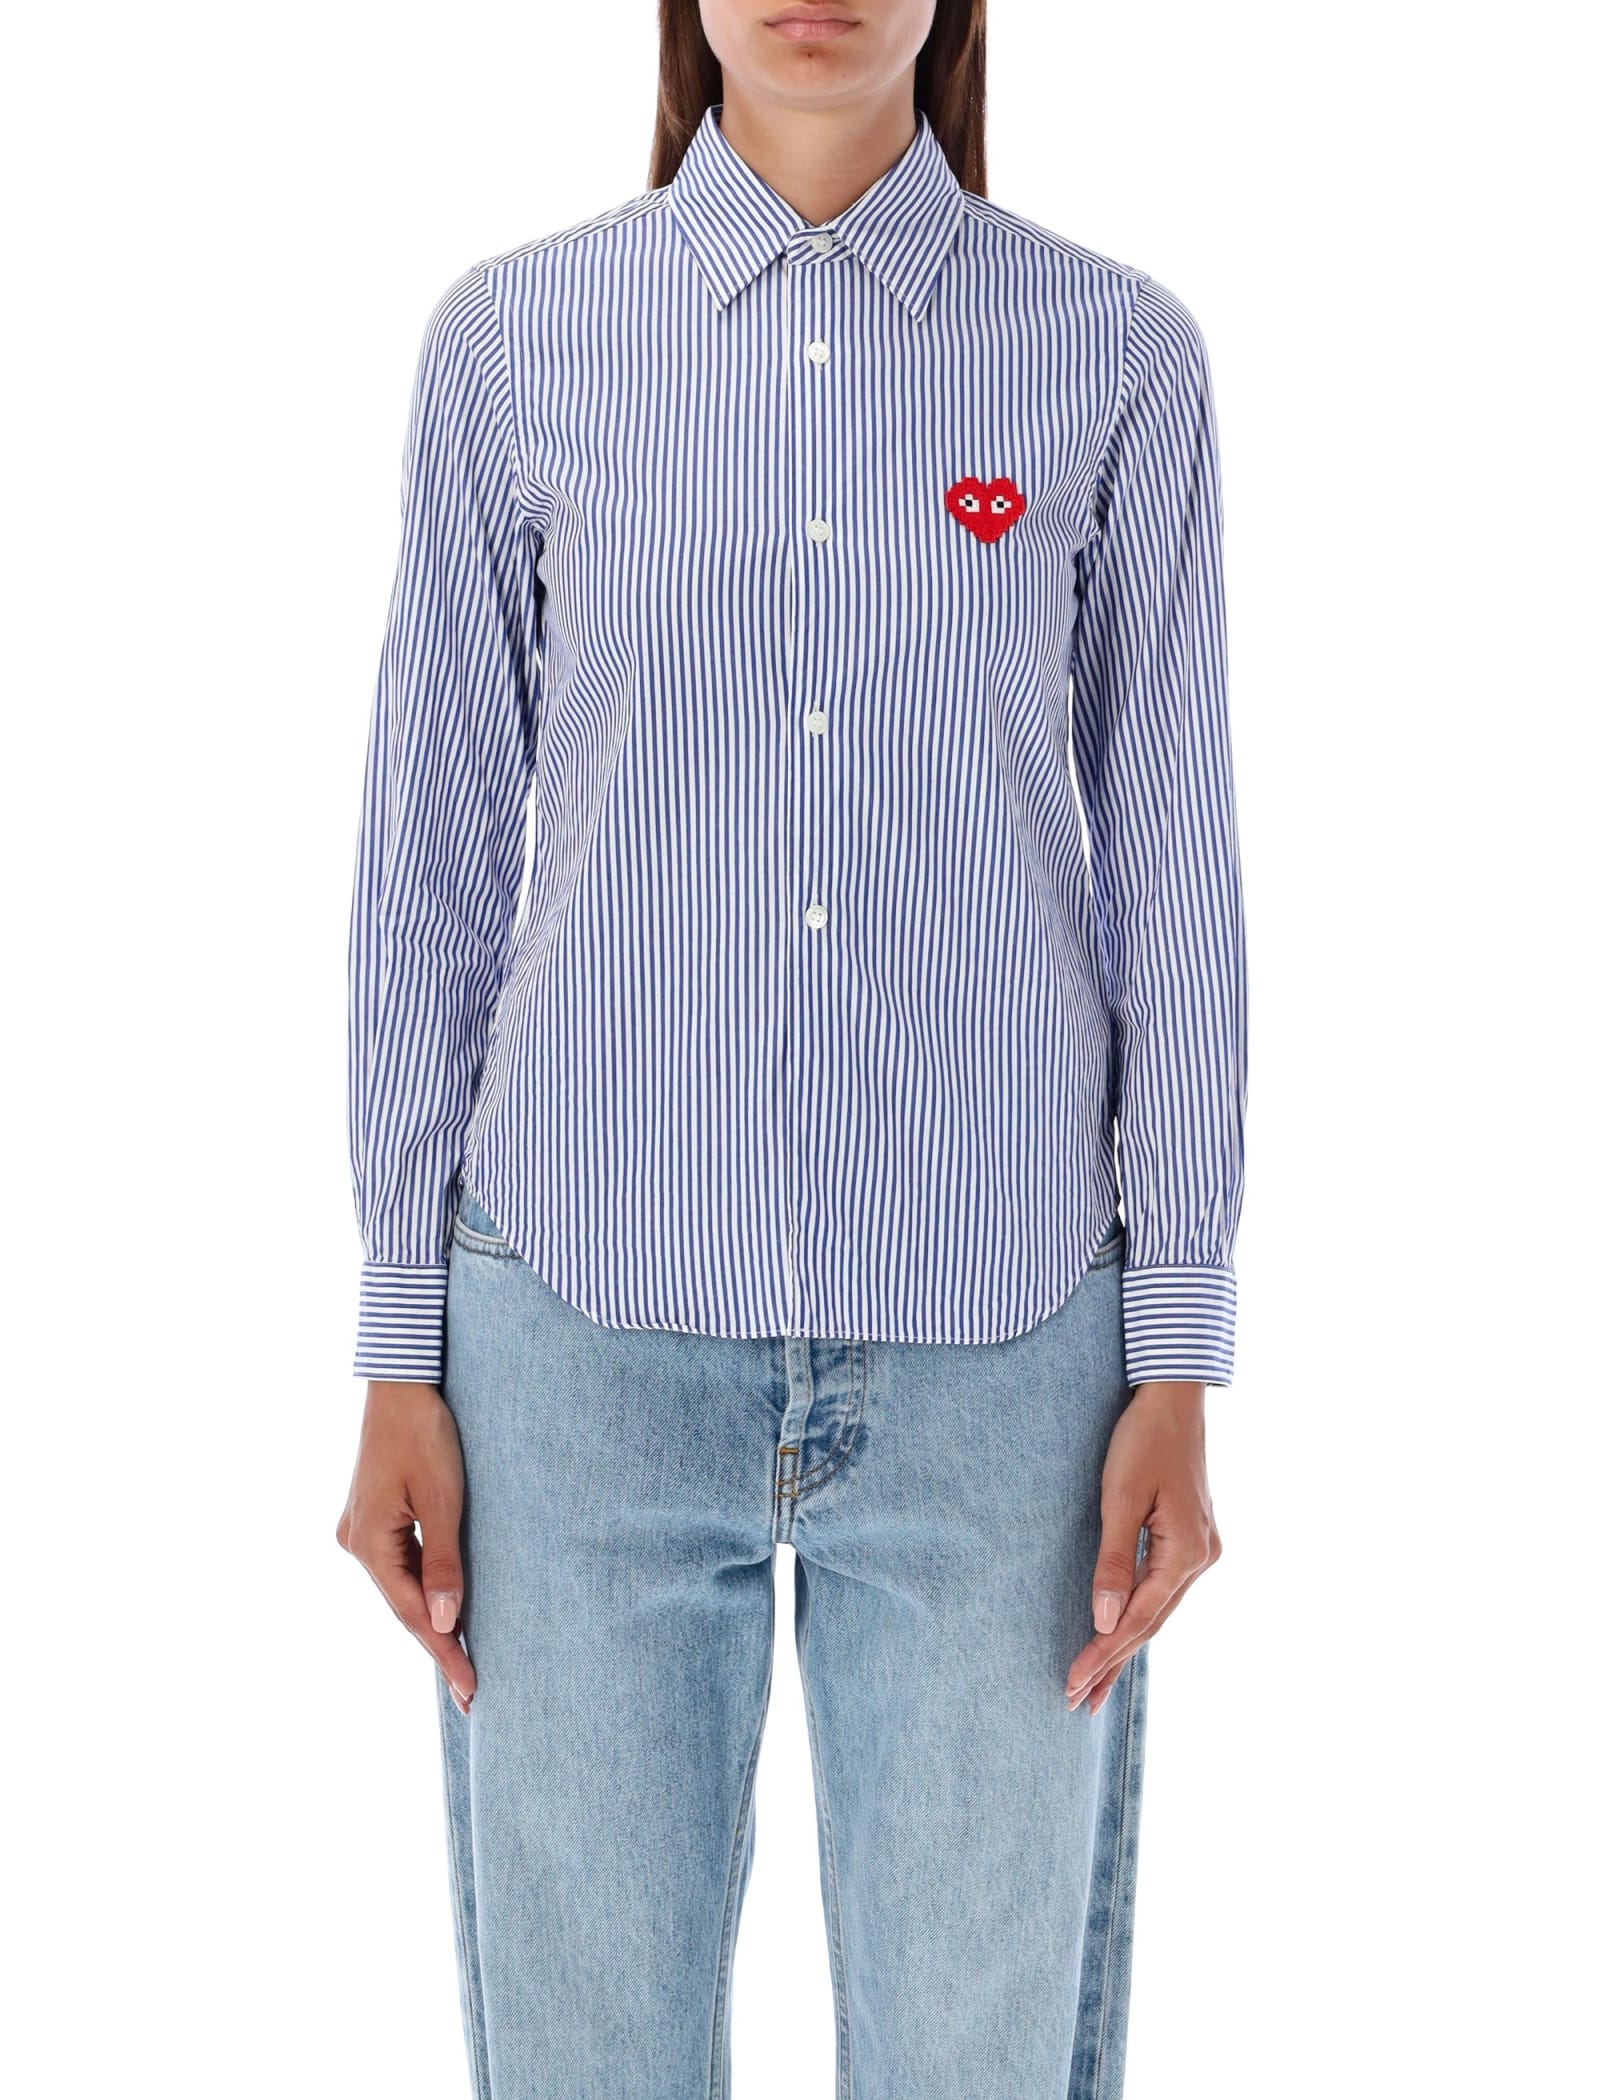 Comme Des Garçons Play Pixel Red Heart Shirt In Blue/white Stripes